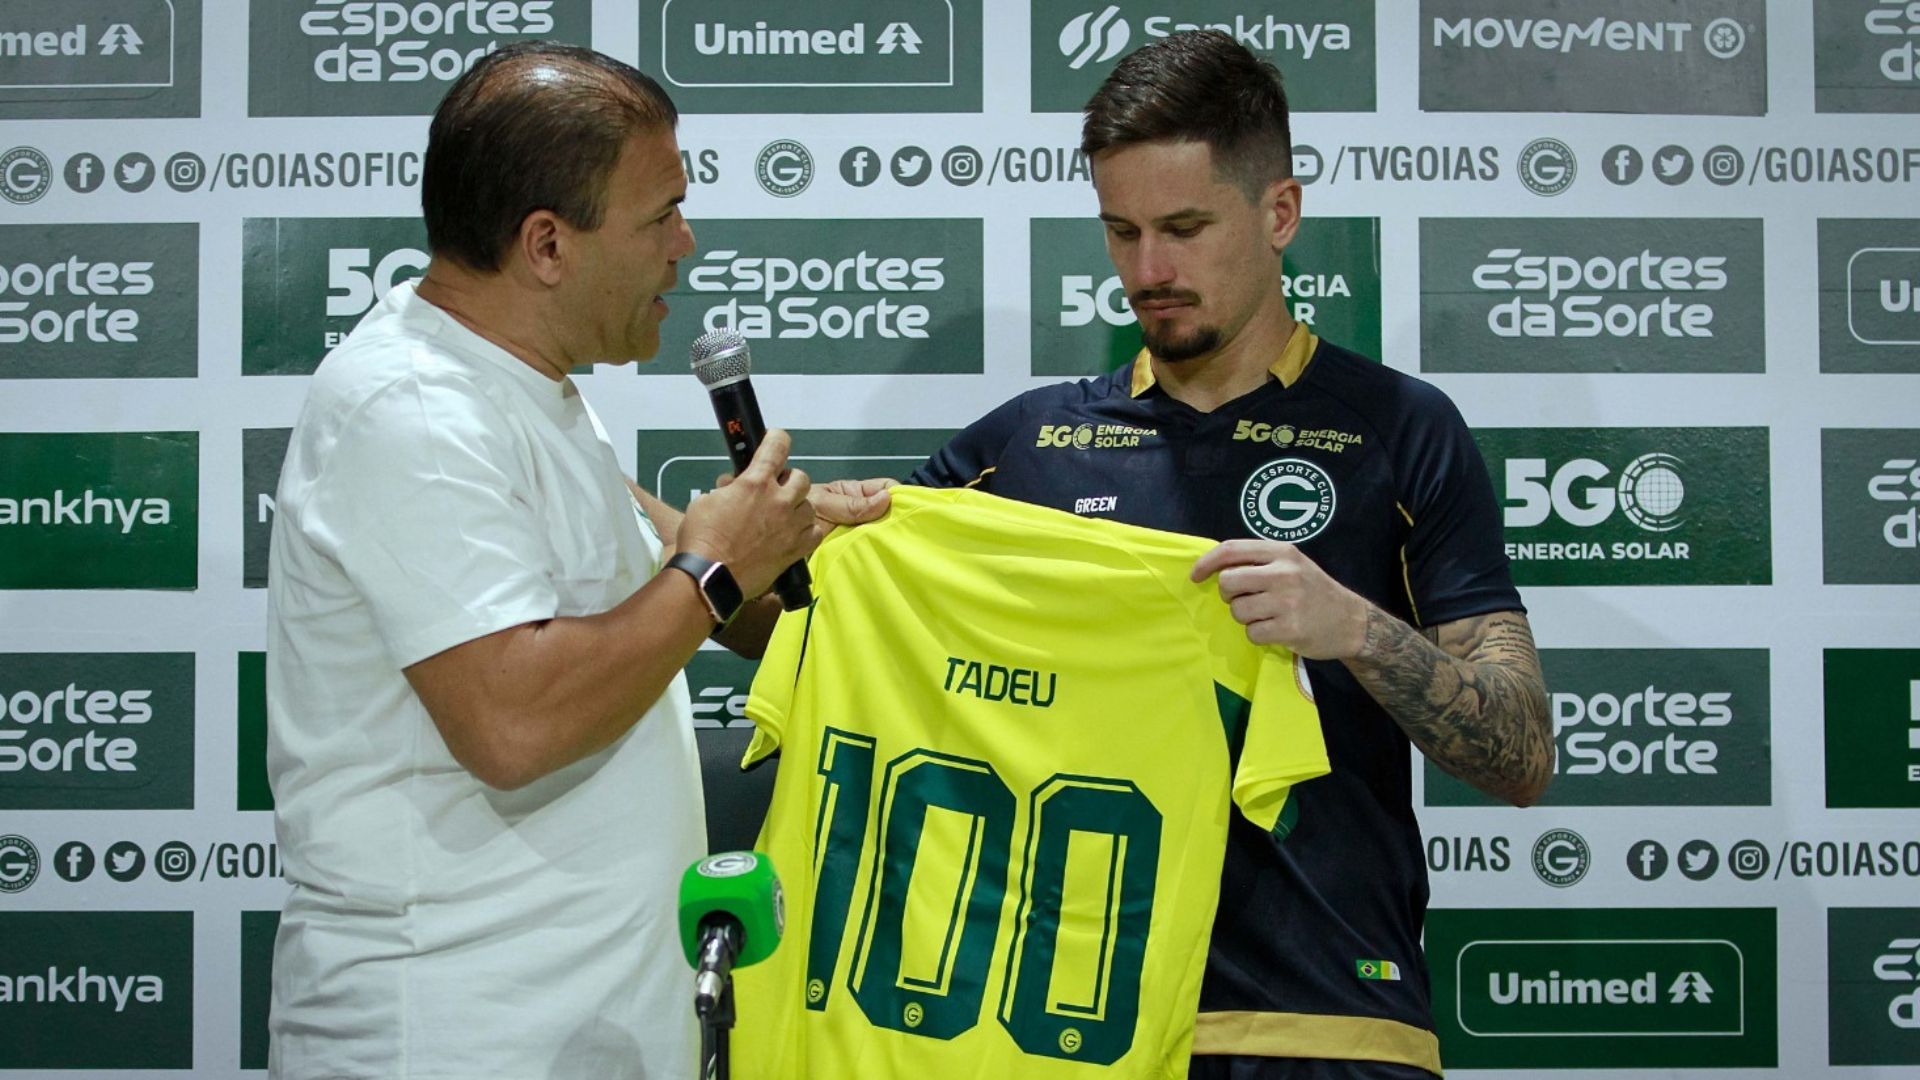 Tadeu recebendo camisa comemorativa por marca inédita (Crédito: Rosiron Rodrigues / Goiás EC)